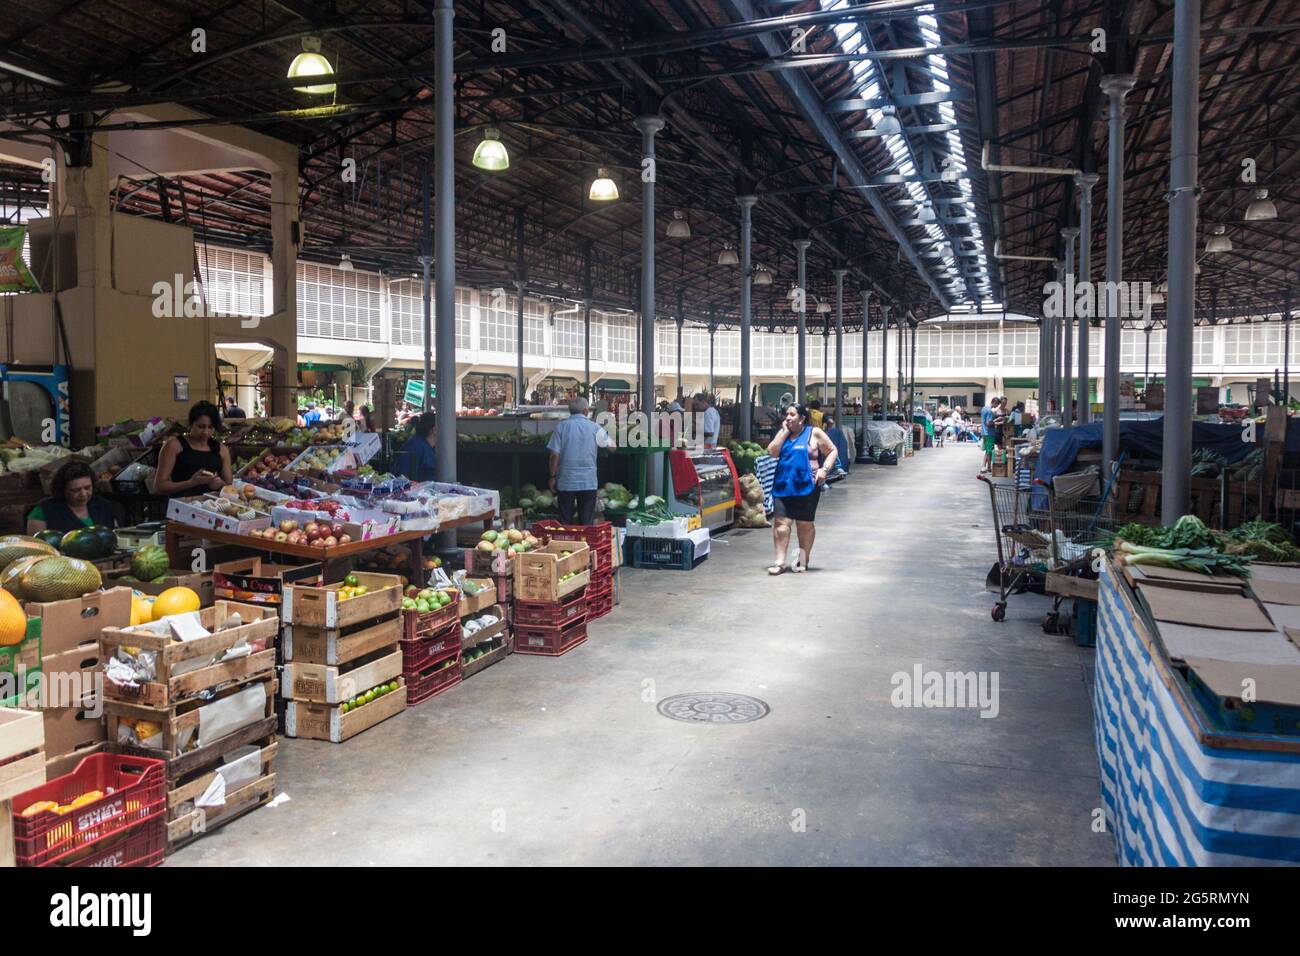 SAN PAOLO, BRASILE - 3 FEBBRAIO 2015: Vista del mercato comunale di Mercado a San Paolo, Brasile Foto Stock